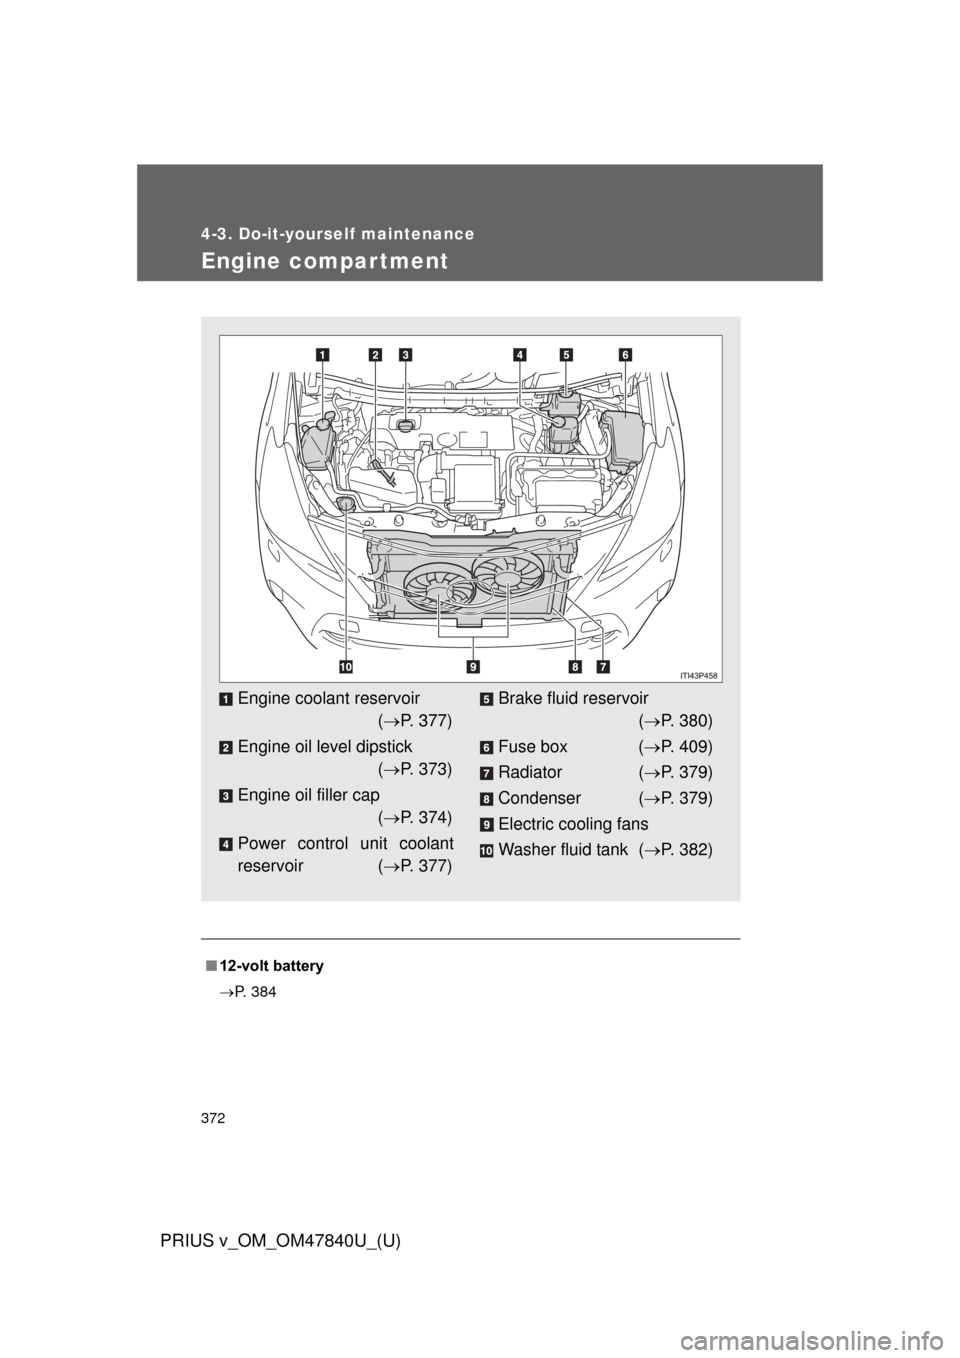 TOYOTA PRIUS V 2014 ZVW40 / 1.G Owners Manual 372
4-3. Do-it-yourself maintenance
PRIUS v_OM_OM47840U_(U)
Engine compar tment
■12-volt battery
P. 384
Engine coolant reservoir 
( P. 377)
Engine oil level dipstick  ( P. 373)
Engine oil f